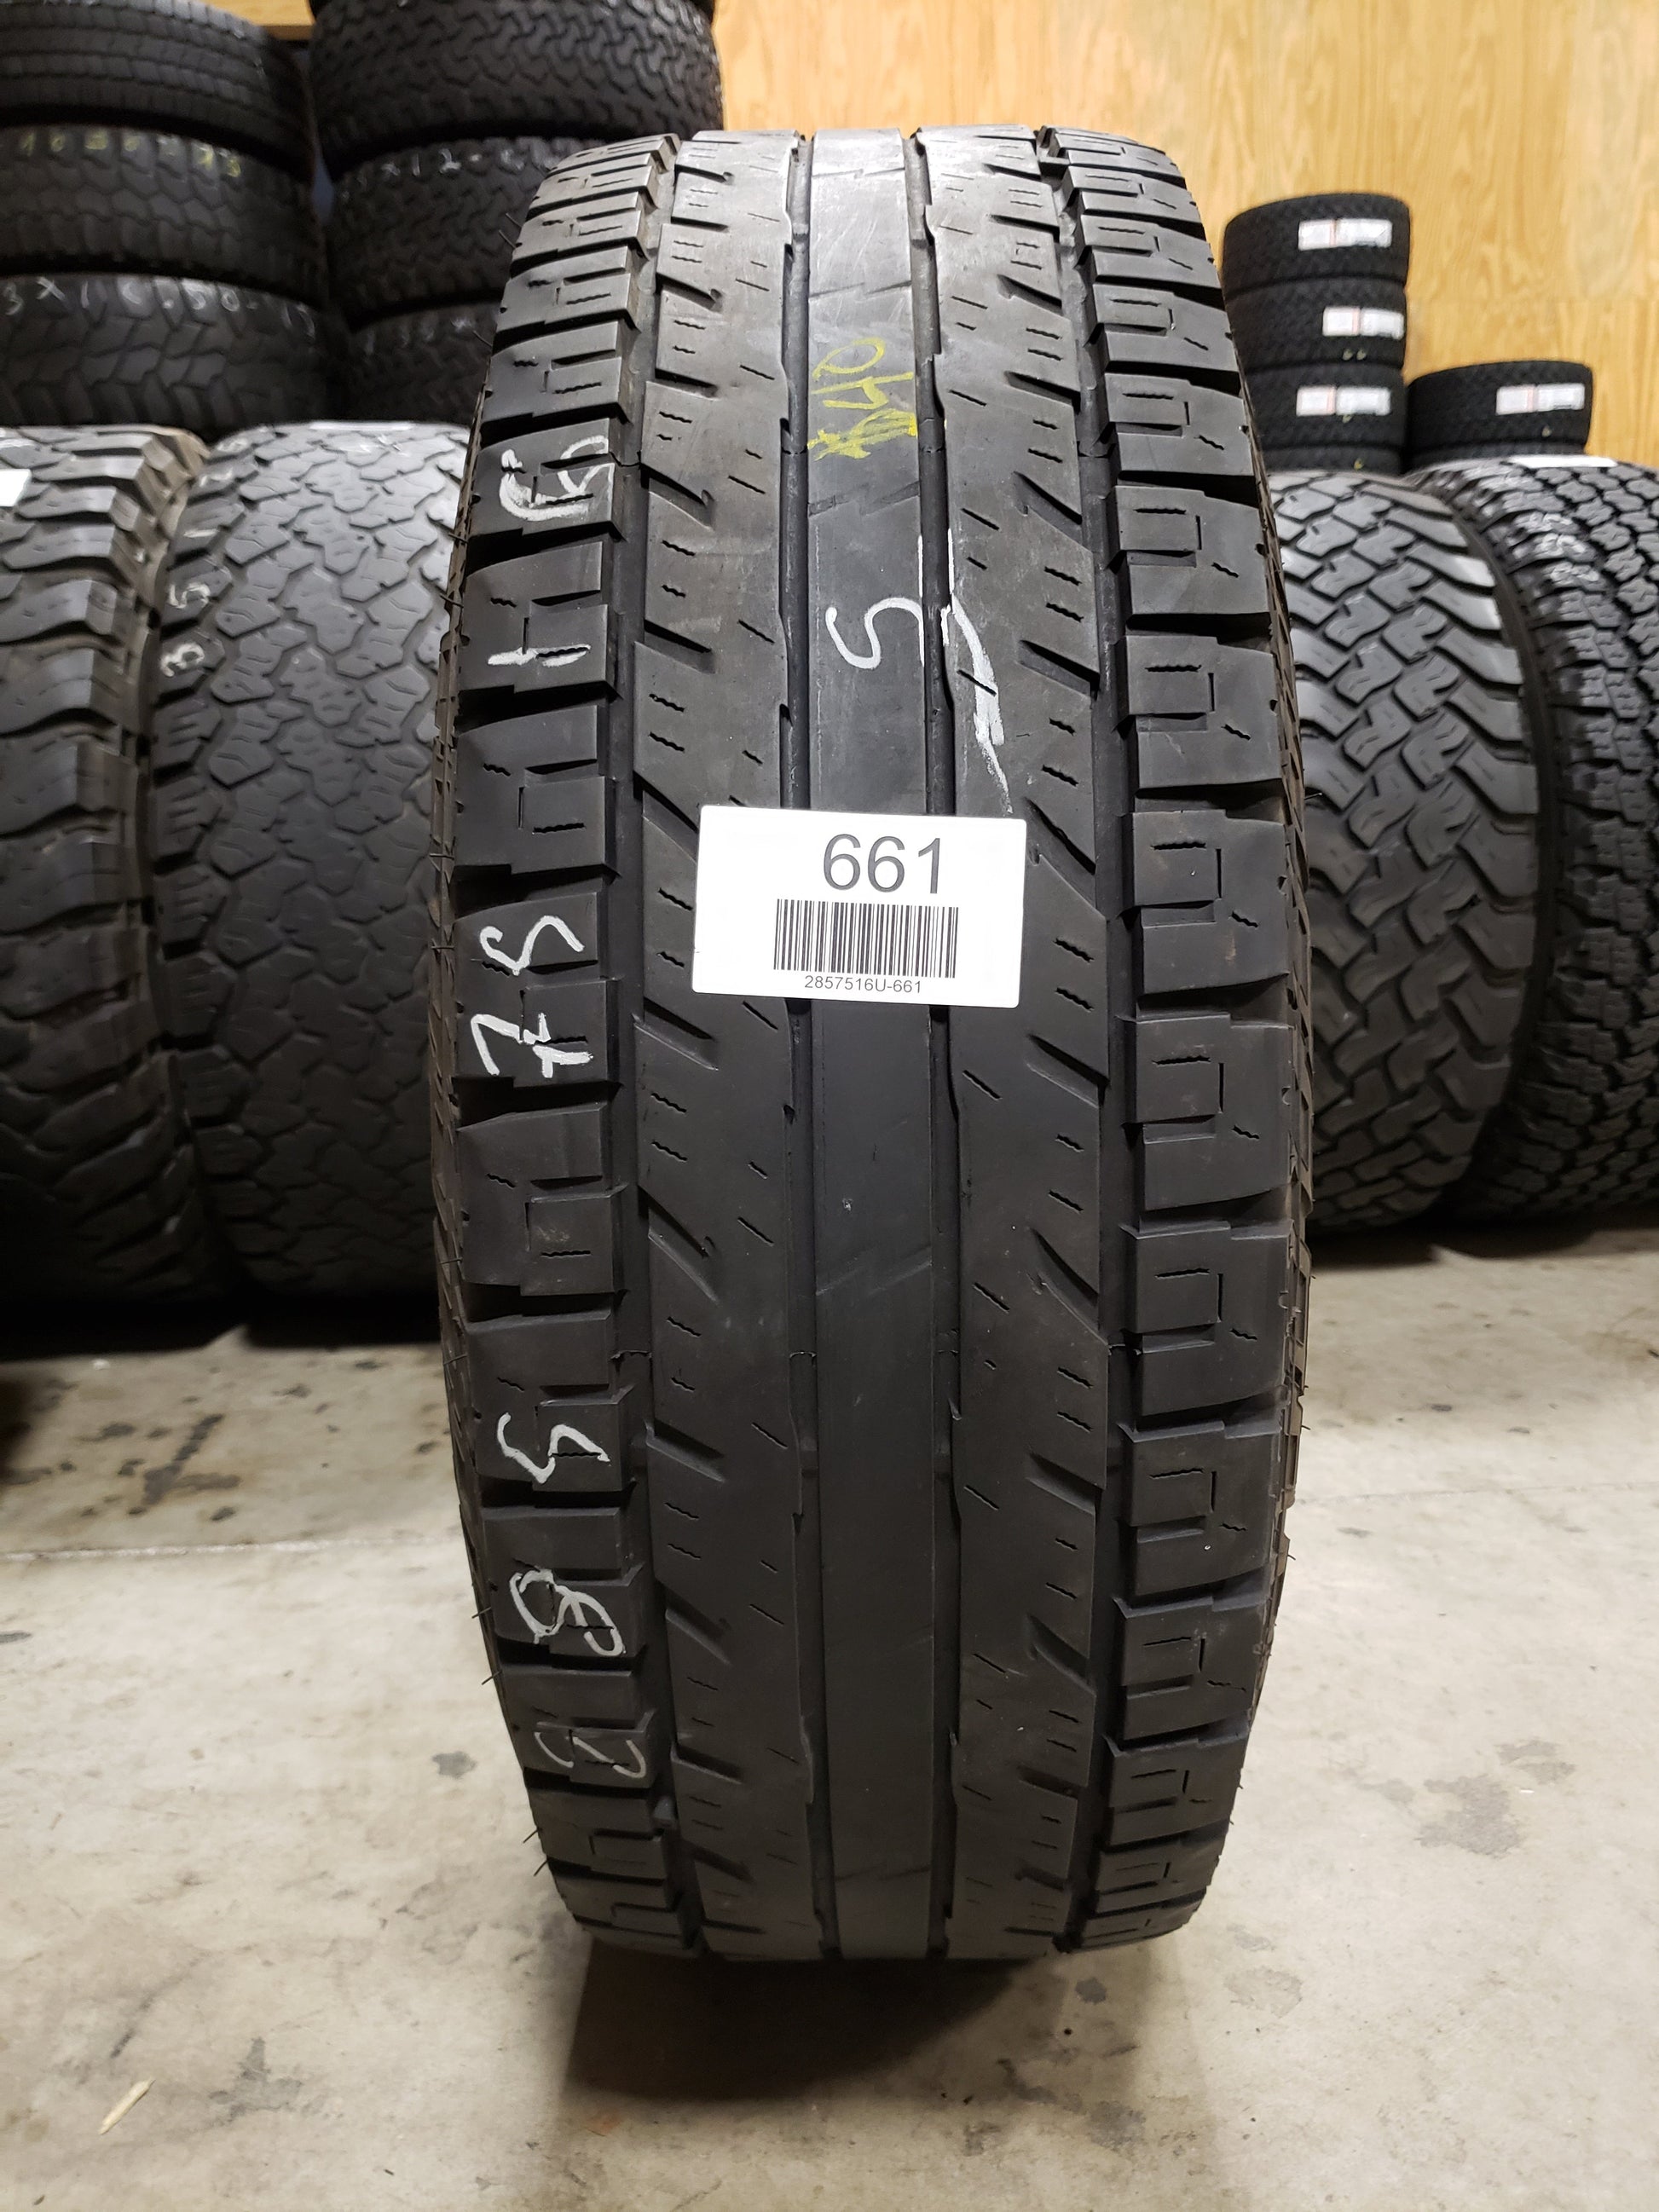 SINGLE 285/75R16 Yokohama Geolander A/T 126/123 R E - Used Tires